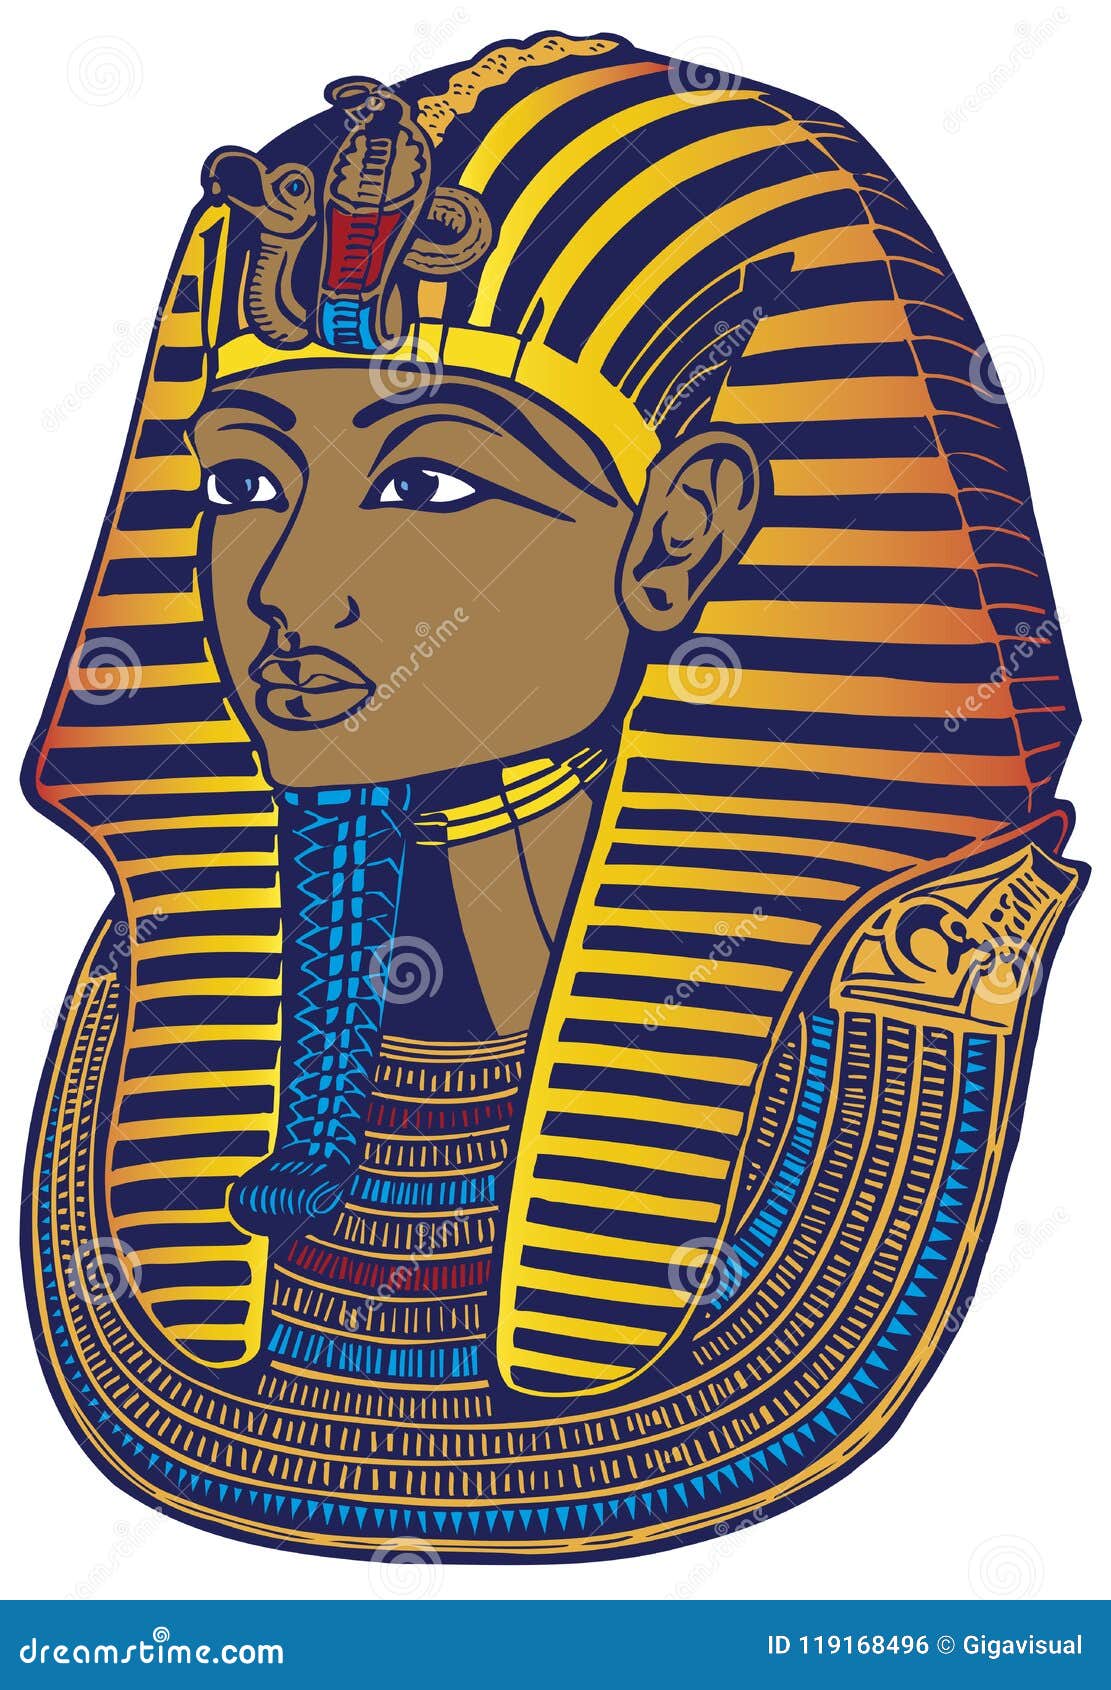 King Tutankhamun Mask stock illustration. Illustration of king - 119168496